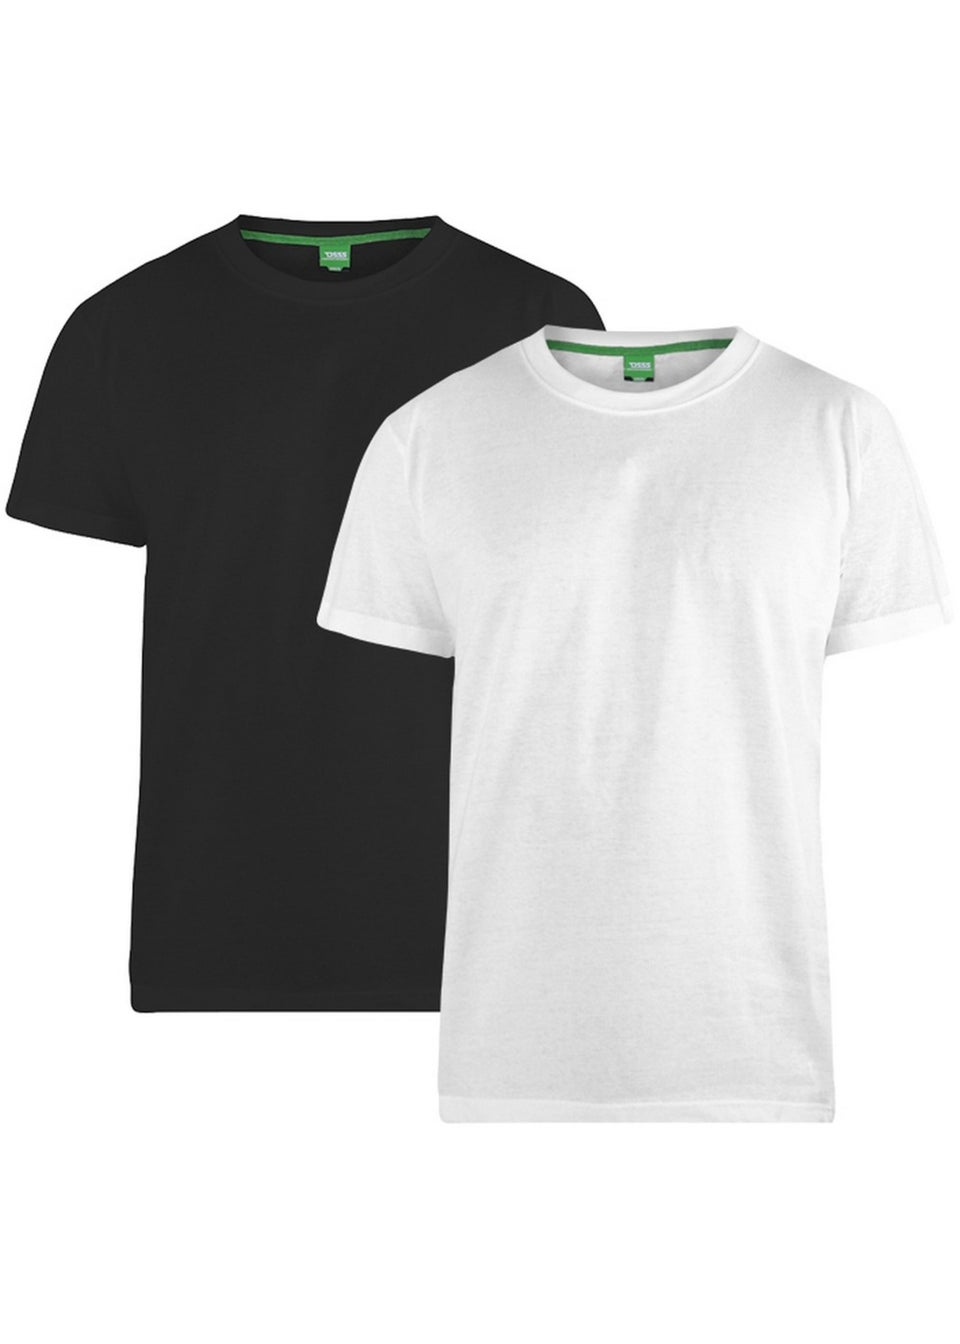 Duke Black/White Fenton Round Neck T-shirts (Pack of 2)